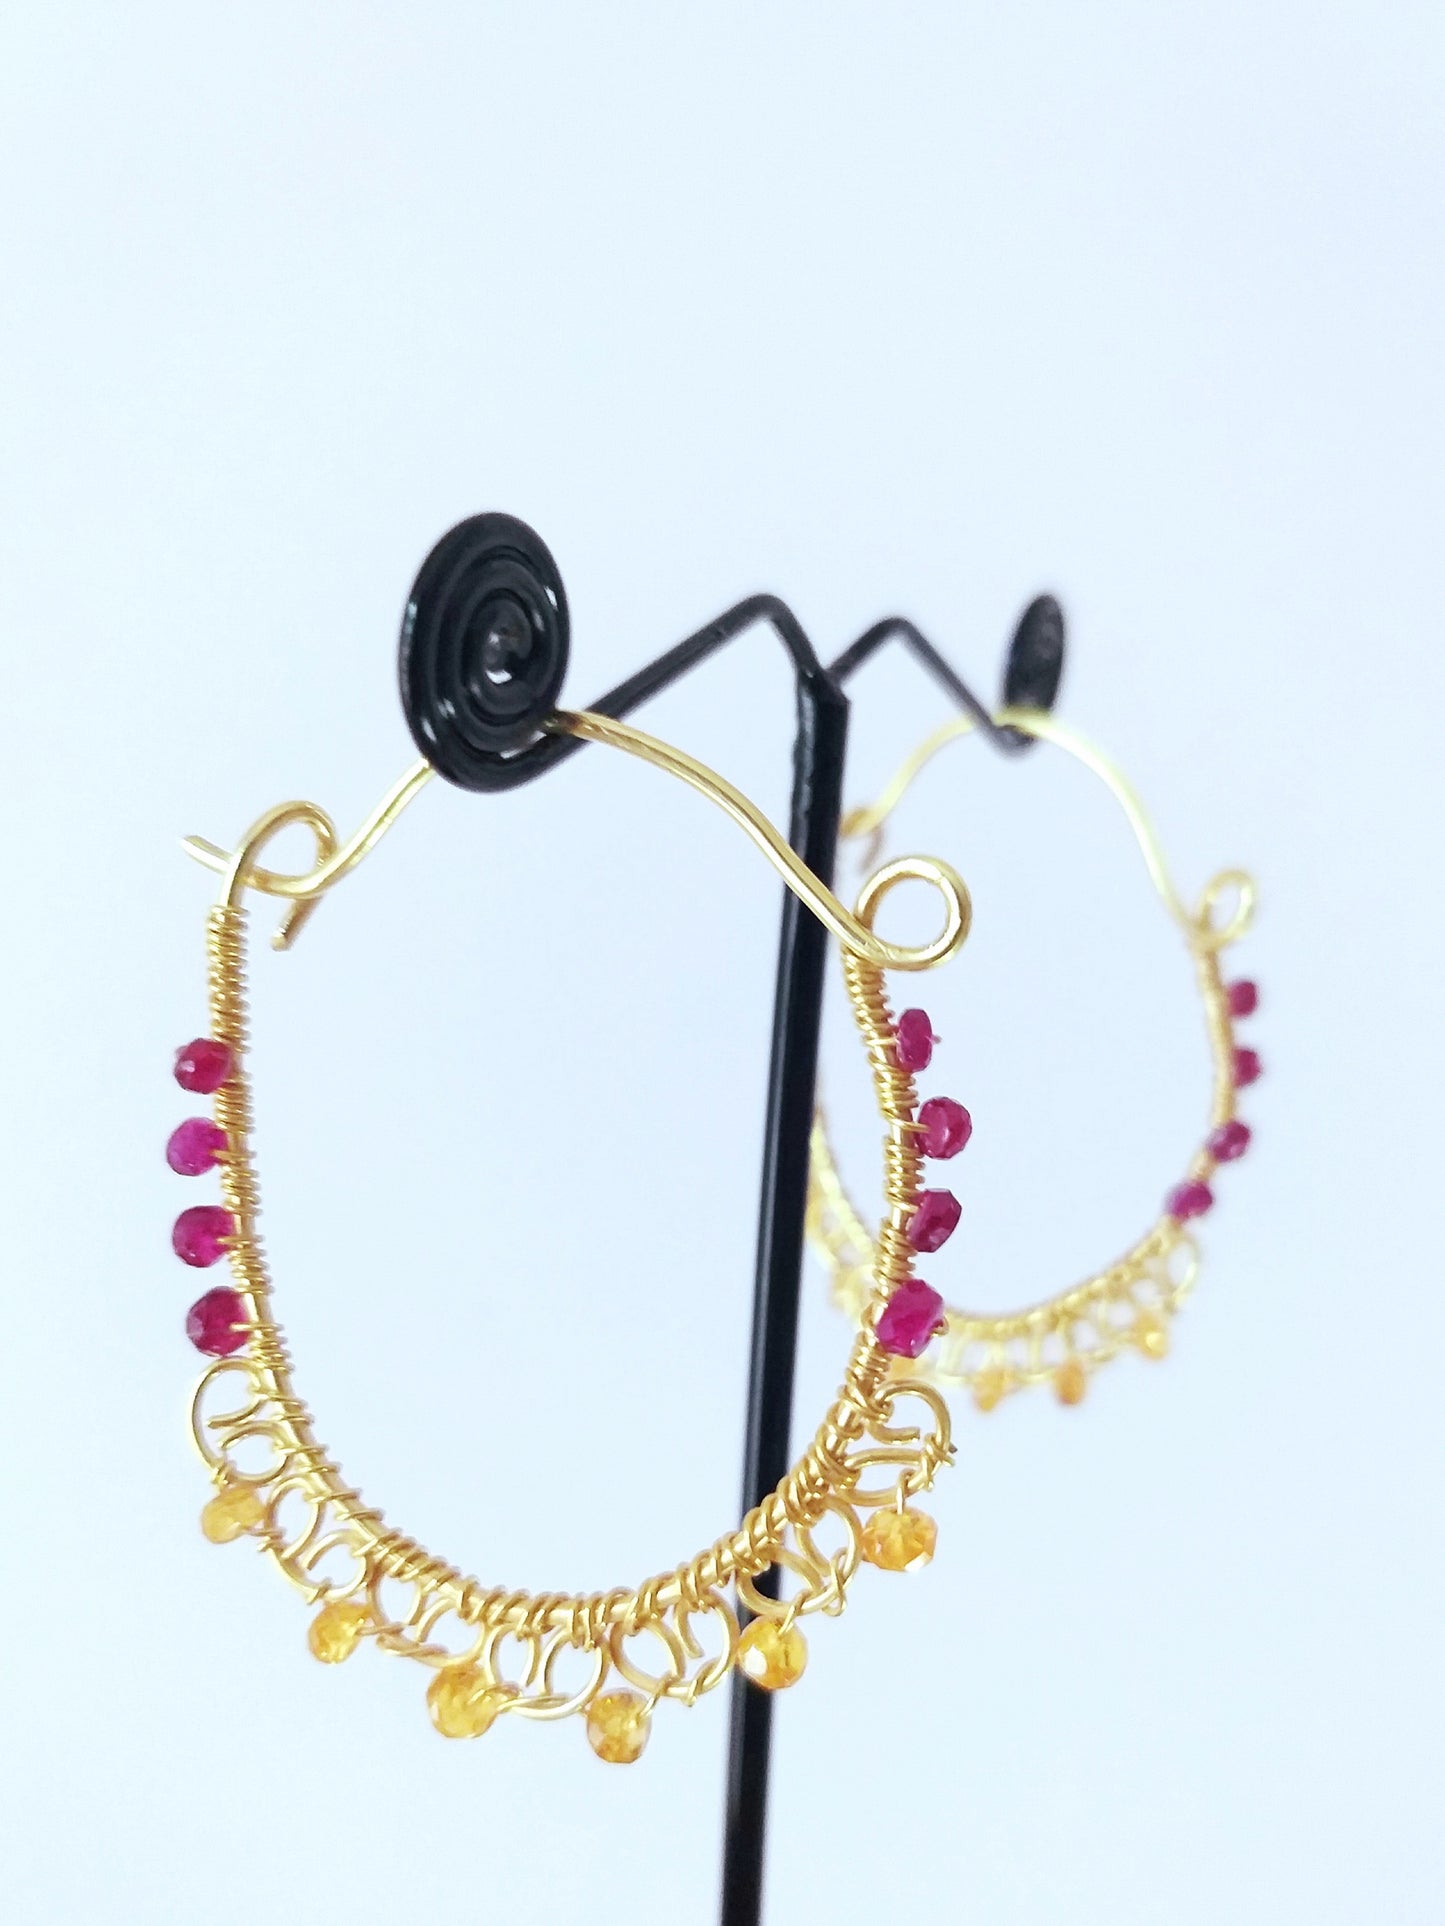 Ruby and Orange Garnet Beads Hoops, 22k Gold Micron Plated Handmade Earrings